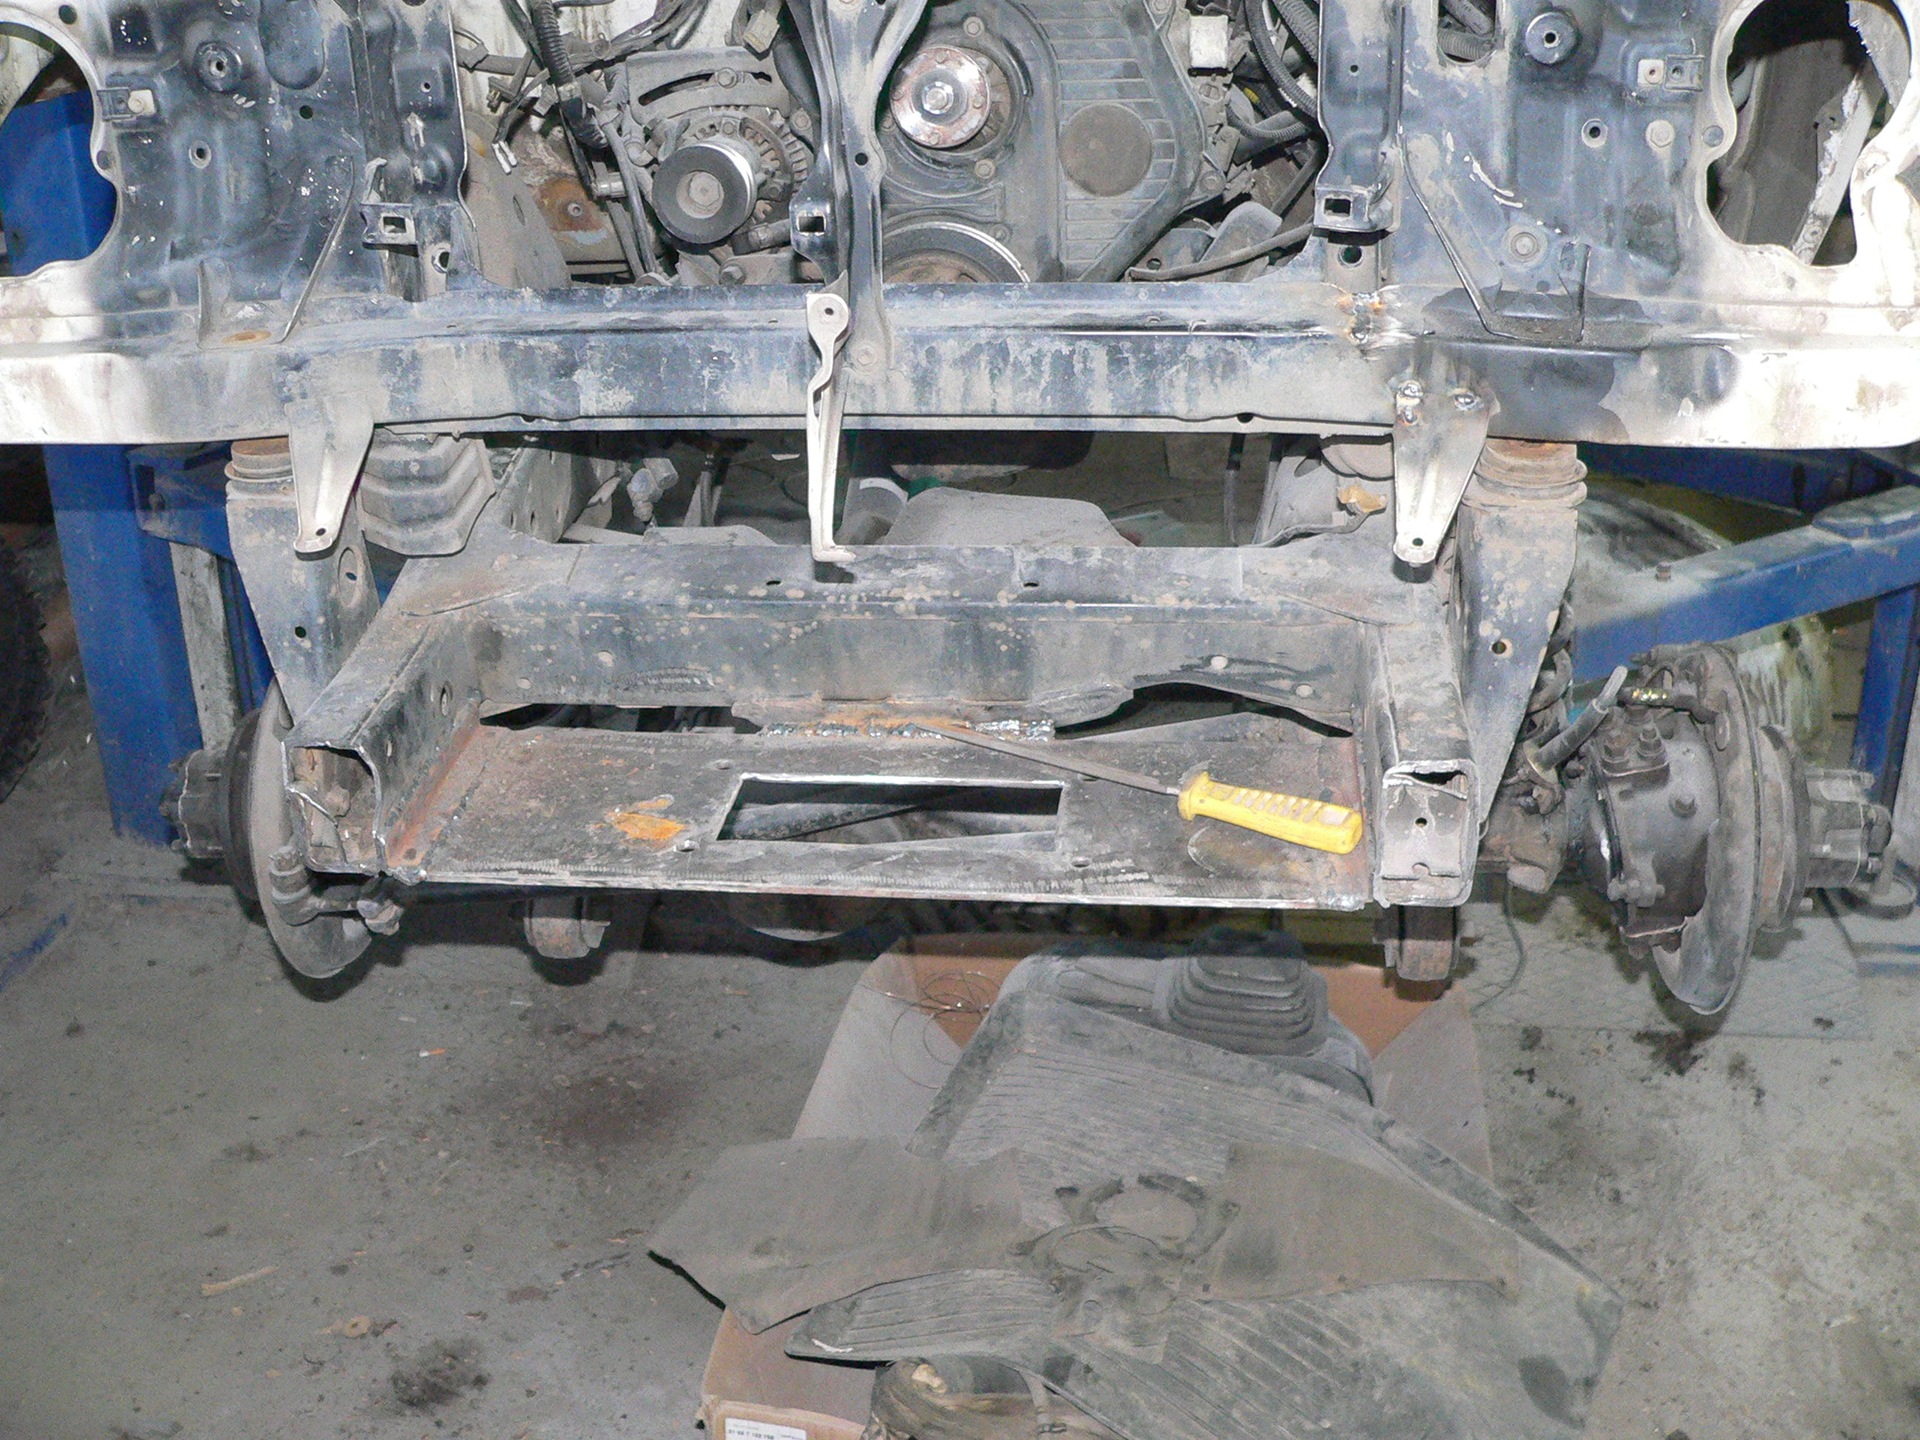 Repair continues - Toyota Land Cruiser 28 L 1992